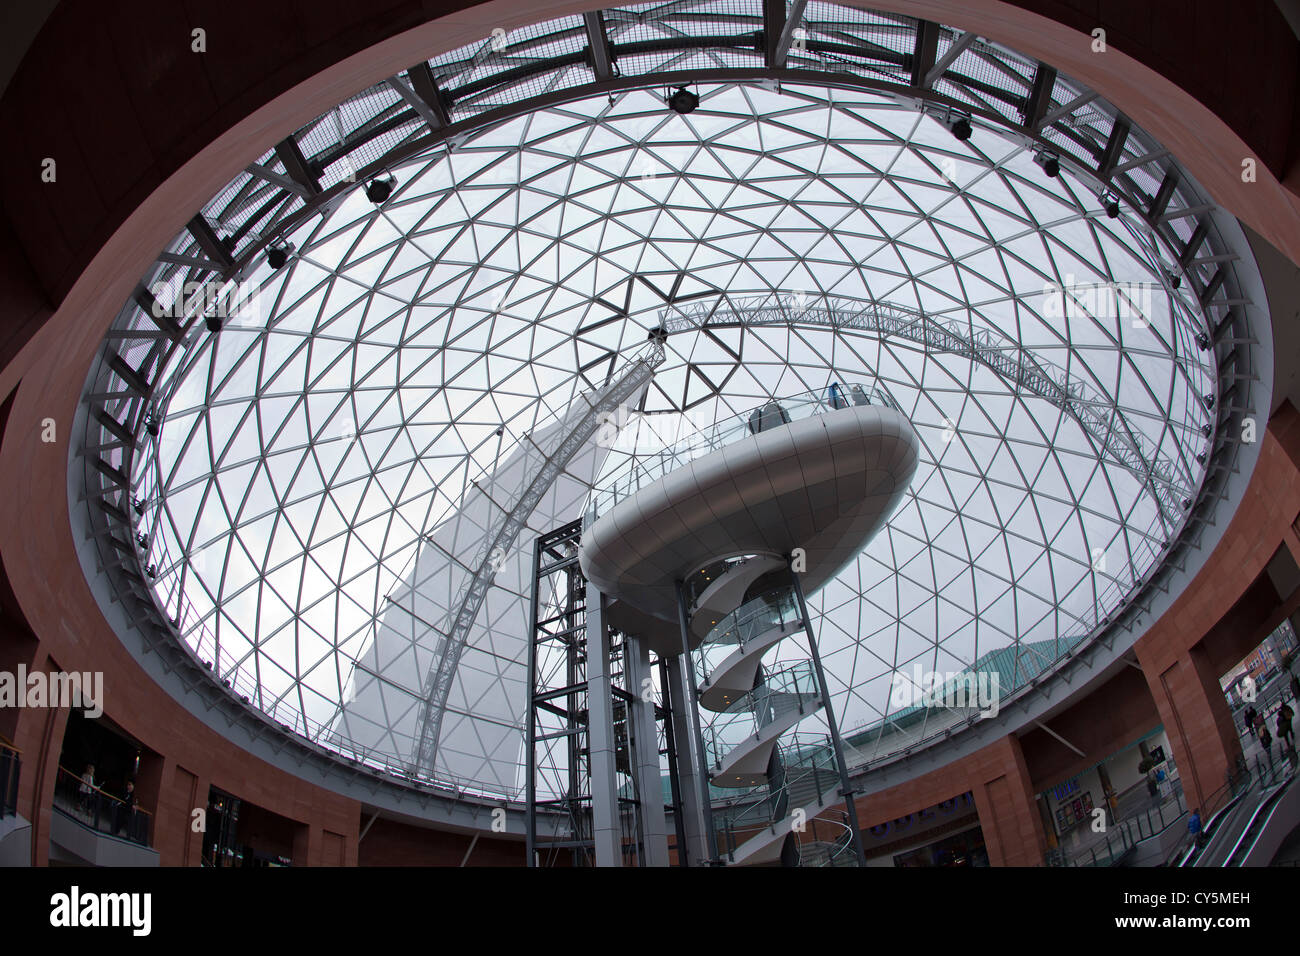 The Dome of Victoria Square in Belfast, Northern Ireland. Stock Photo